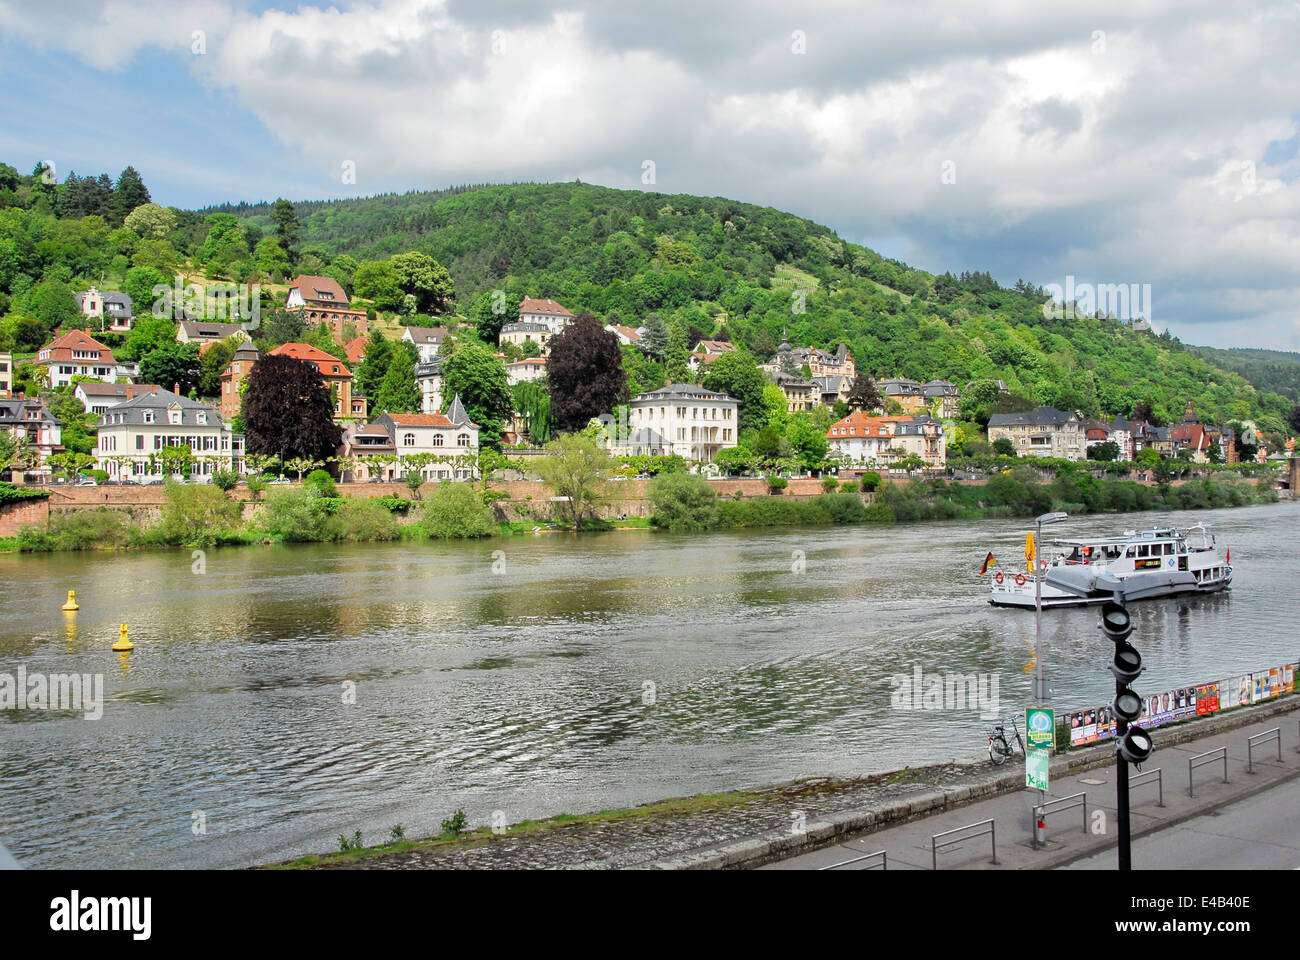 Mansions across the River Neckar in Heidelberg, Germany Stock Photo